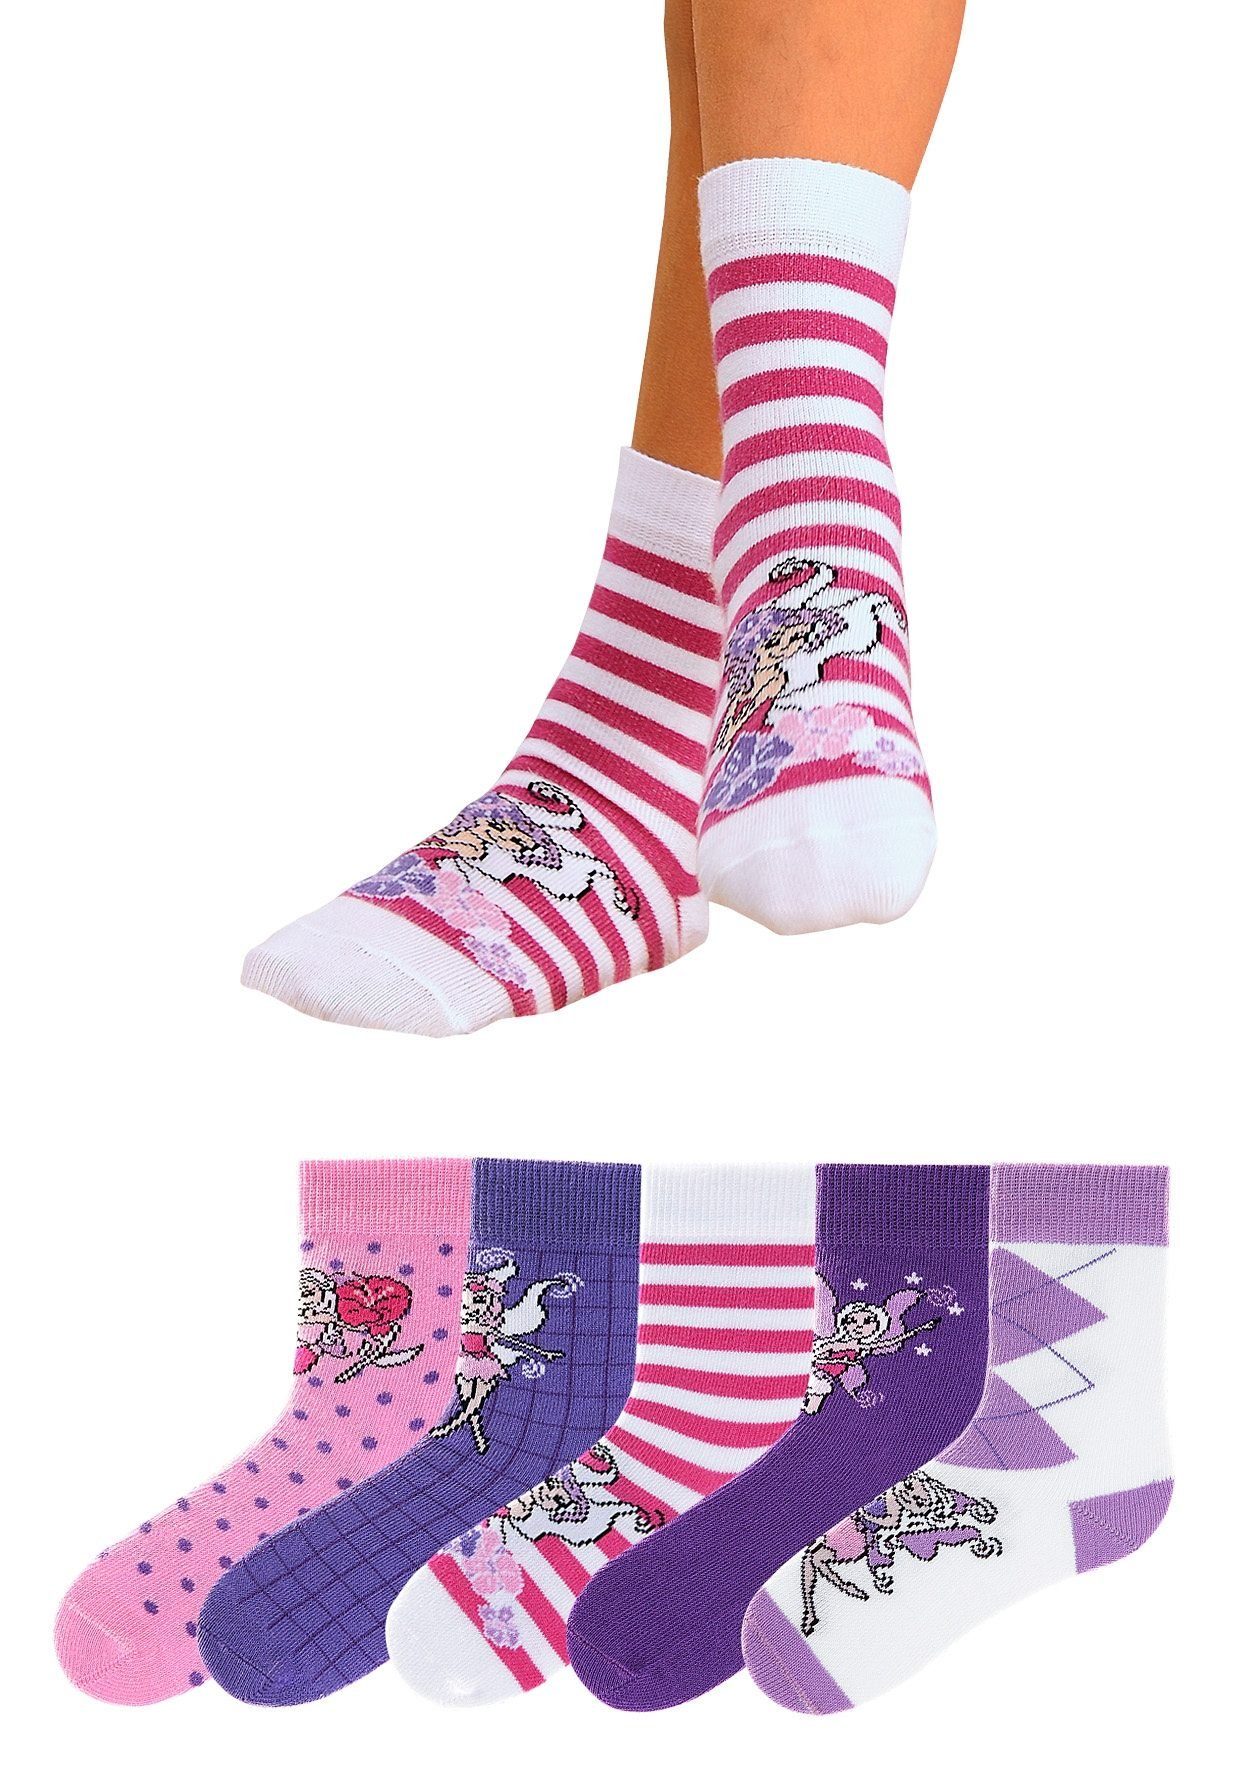 H.I.S Socken (5-Paar) in 5 farbenfrohen Designs